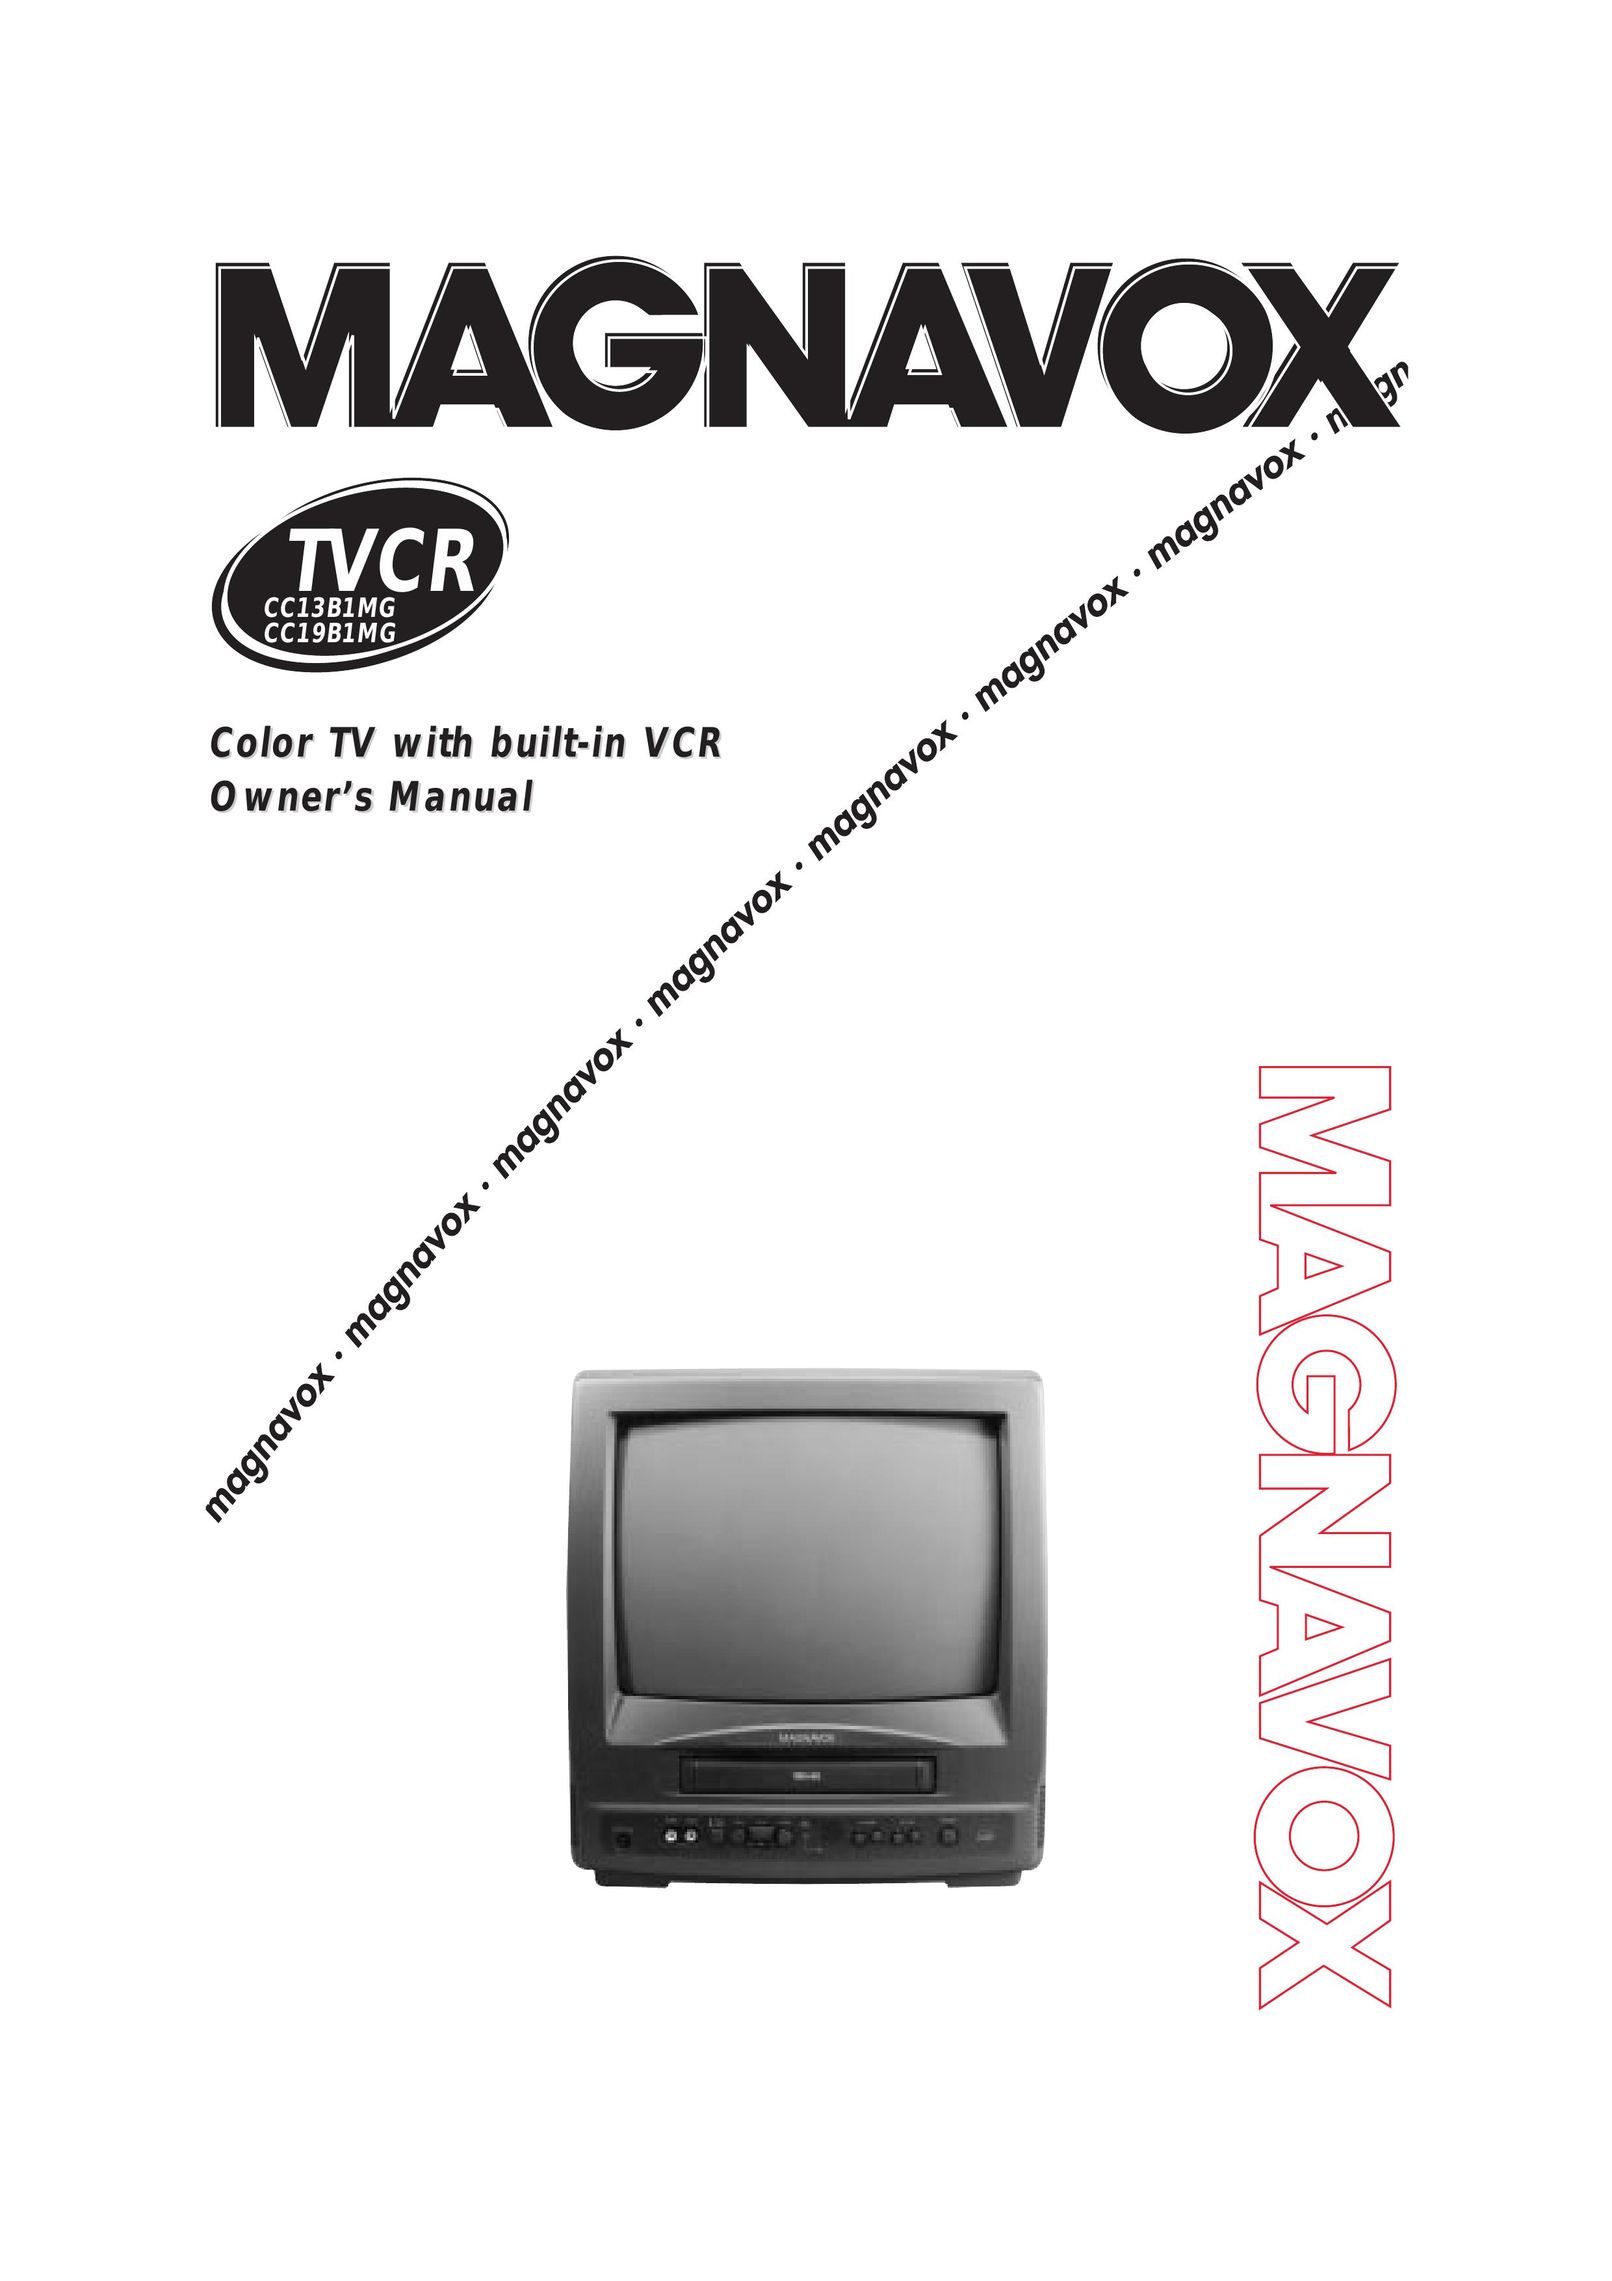 Magnavox TVCRCC13B1MG TV VCR Combo User Manual